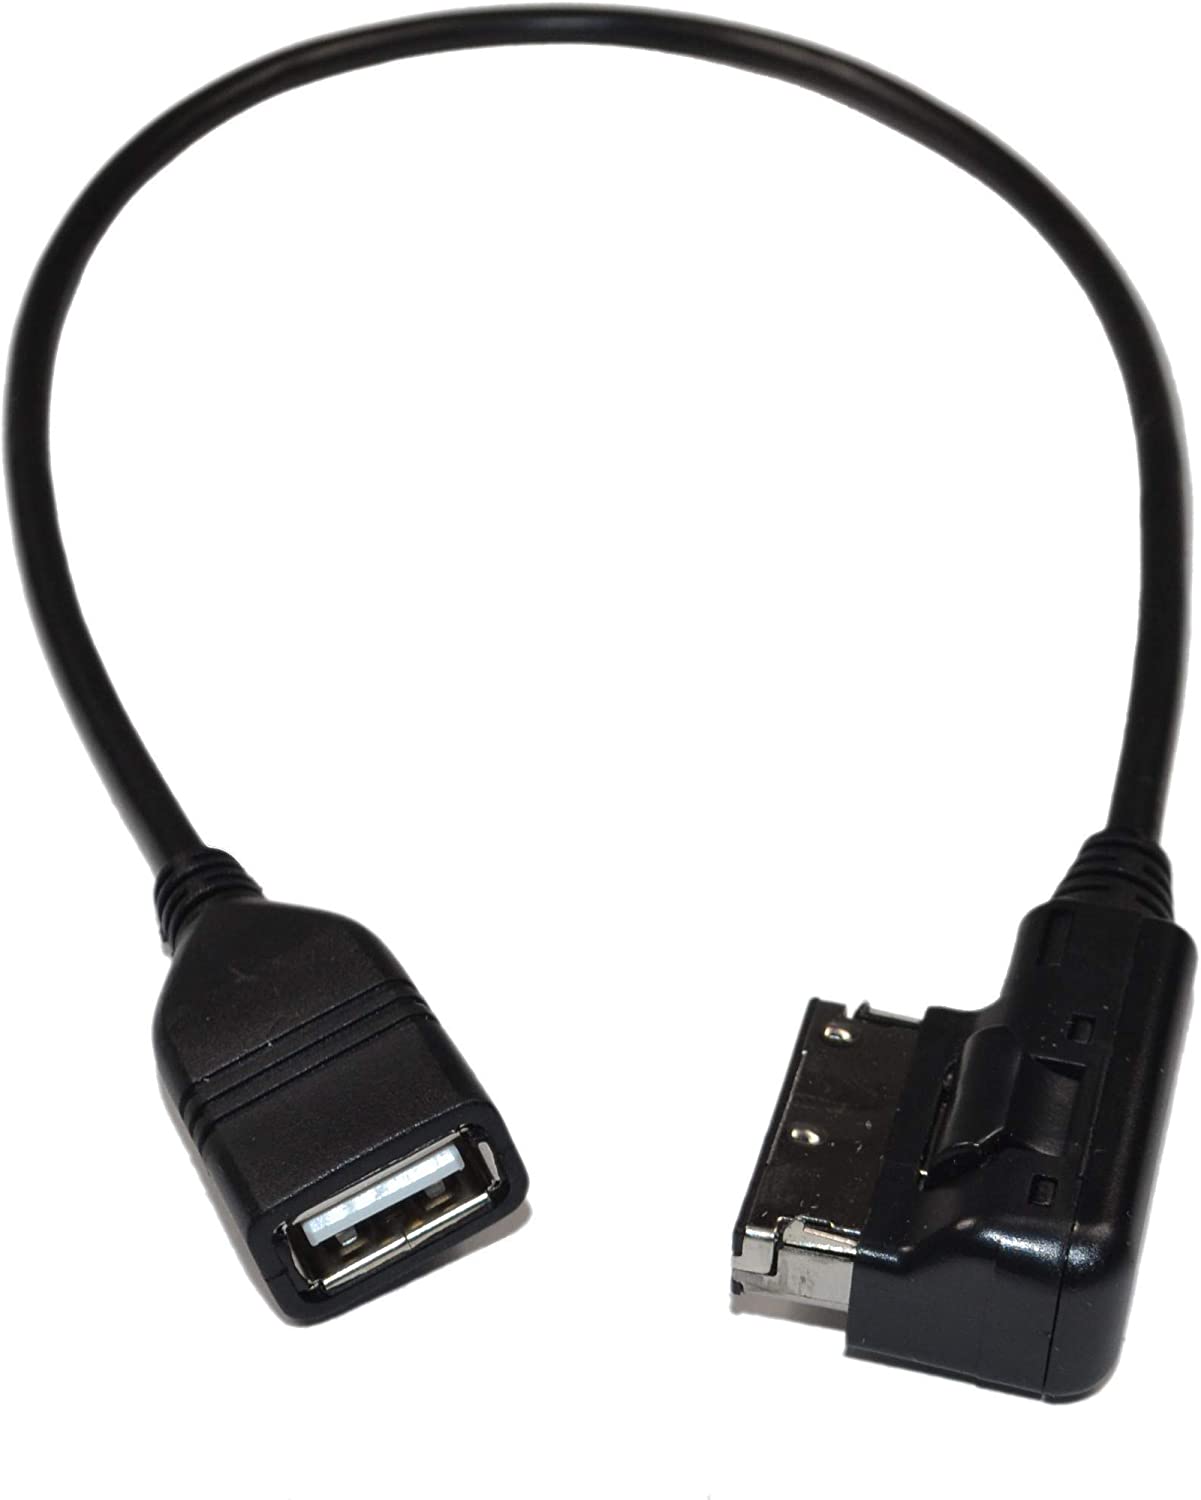 HQRP MDI MMI / USB Cable Adapter for VW Volkswagen CC 2012, Golf R MK6 / Golf Sportwagen MK6 2012 2013, Audio MP3 Music Interface Adapter - image 3 of 7